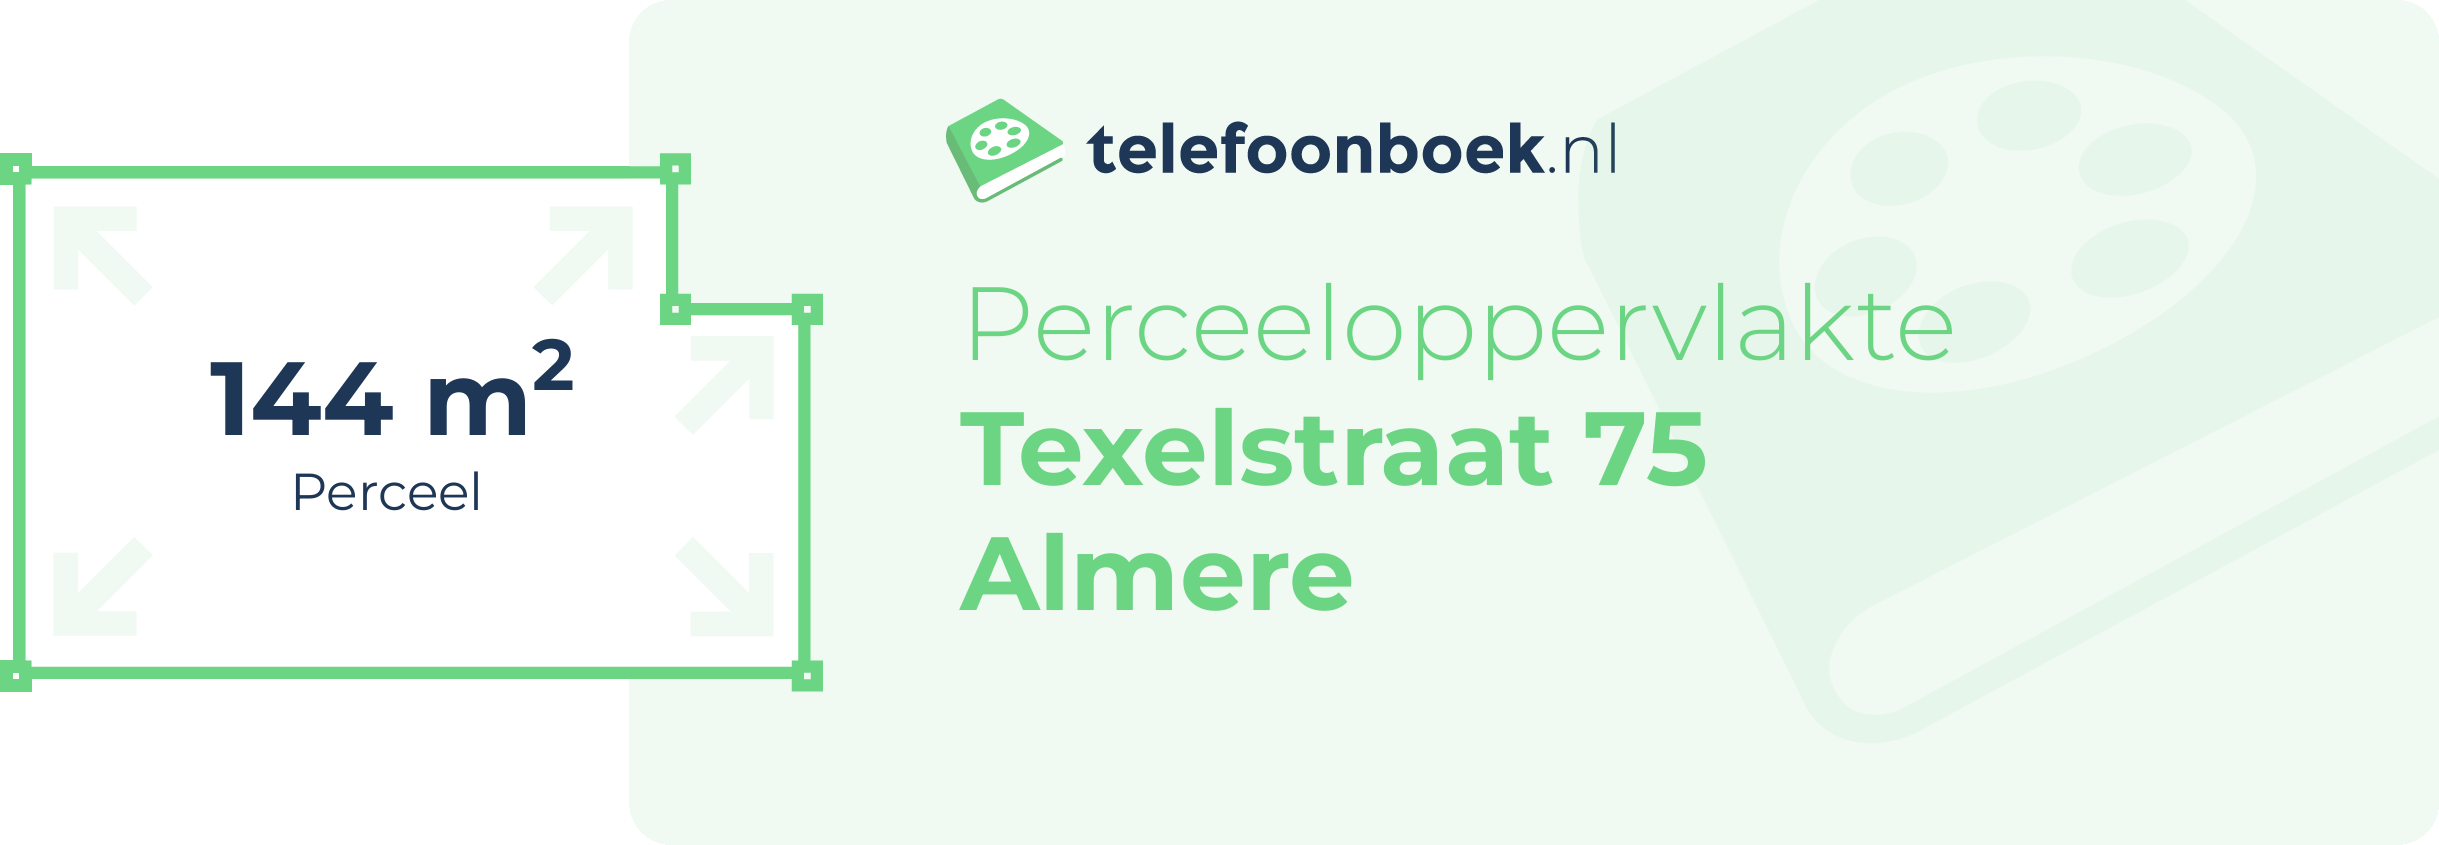 Perceeloppervlakte Texelstraat 75 Almere